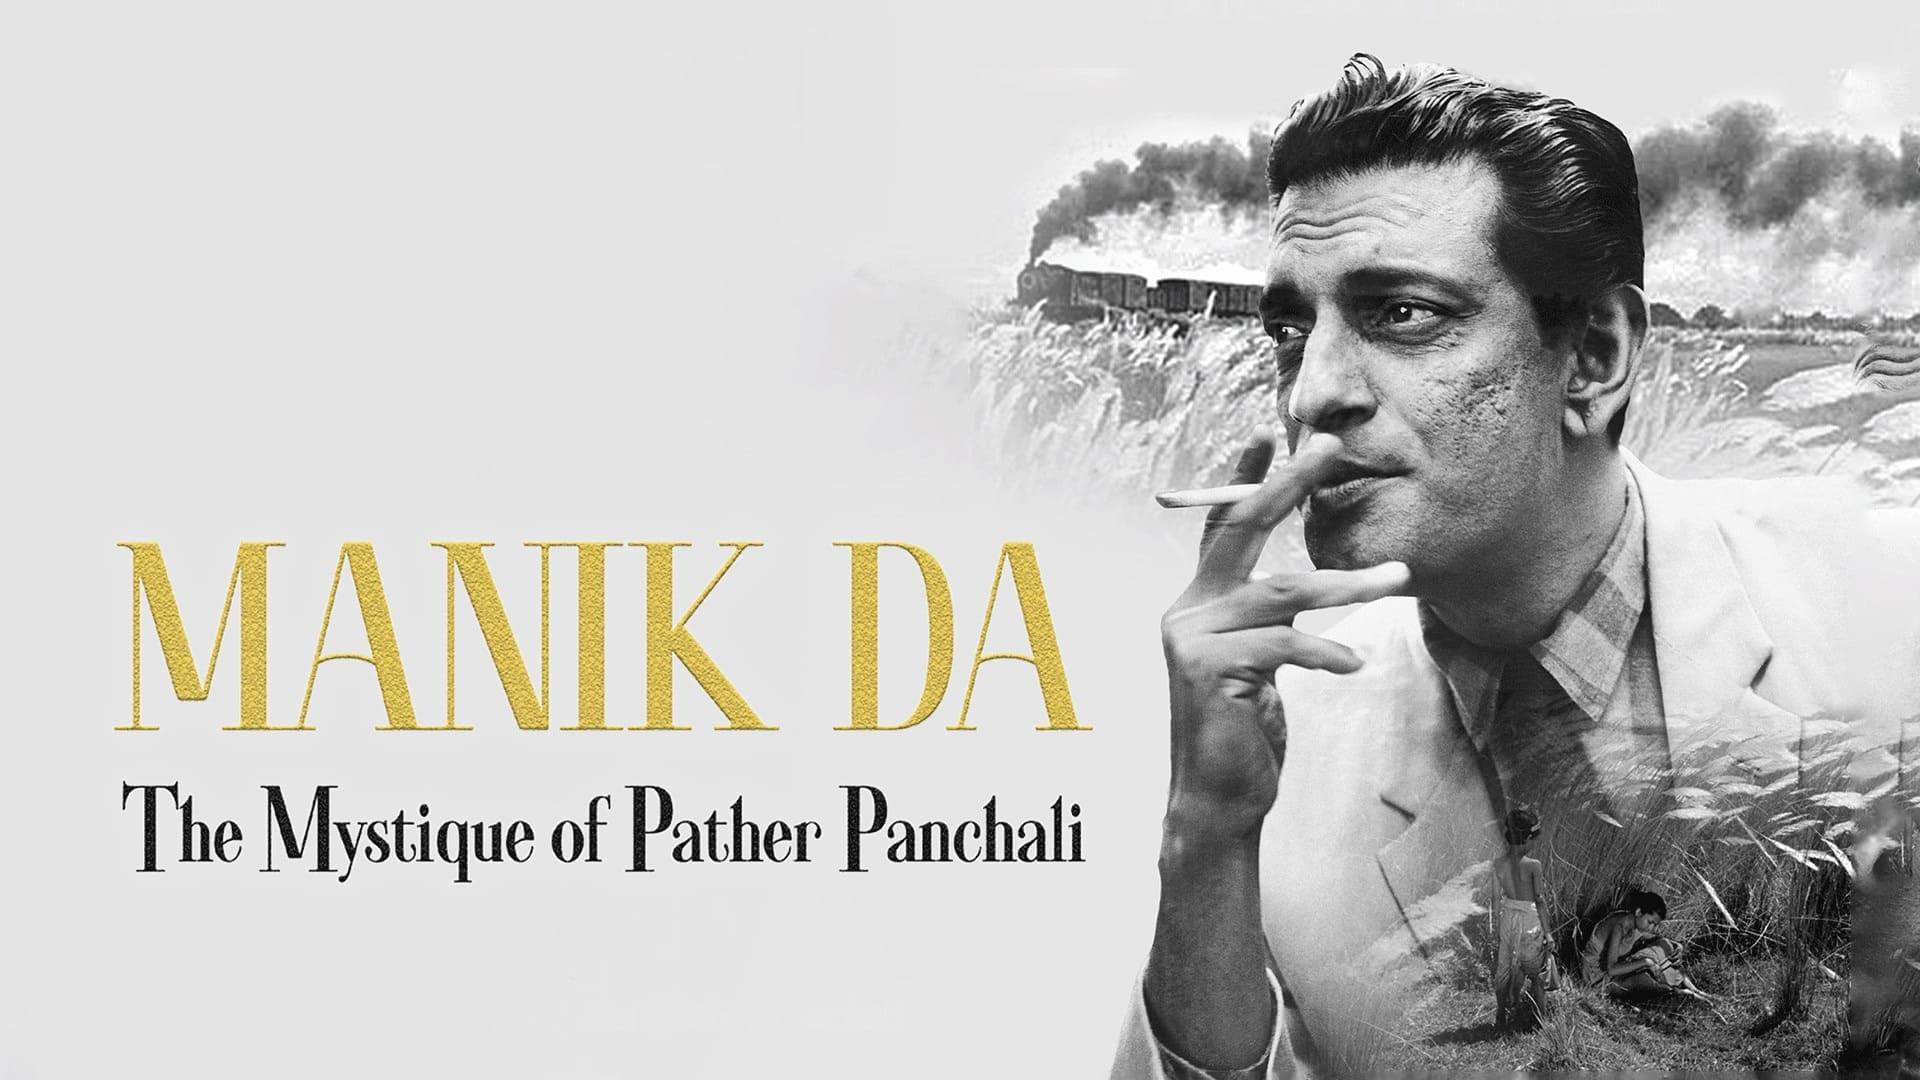 Manik da: The Mystique of Pather Panchali backdrop